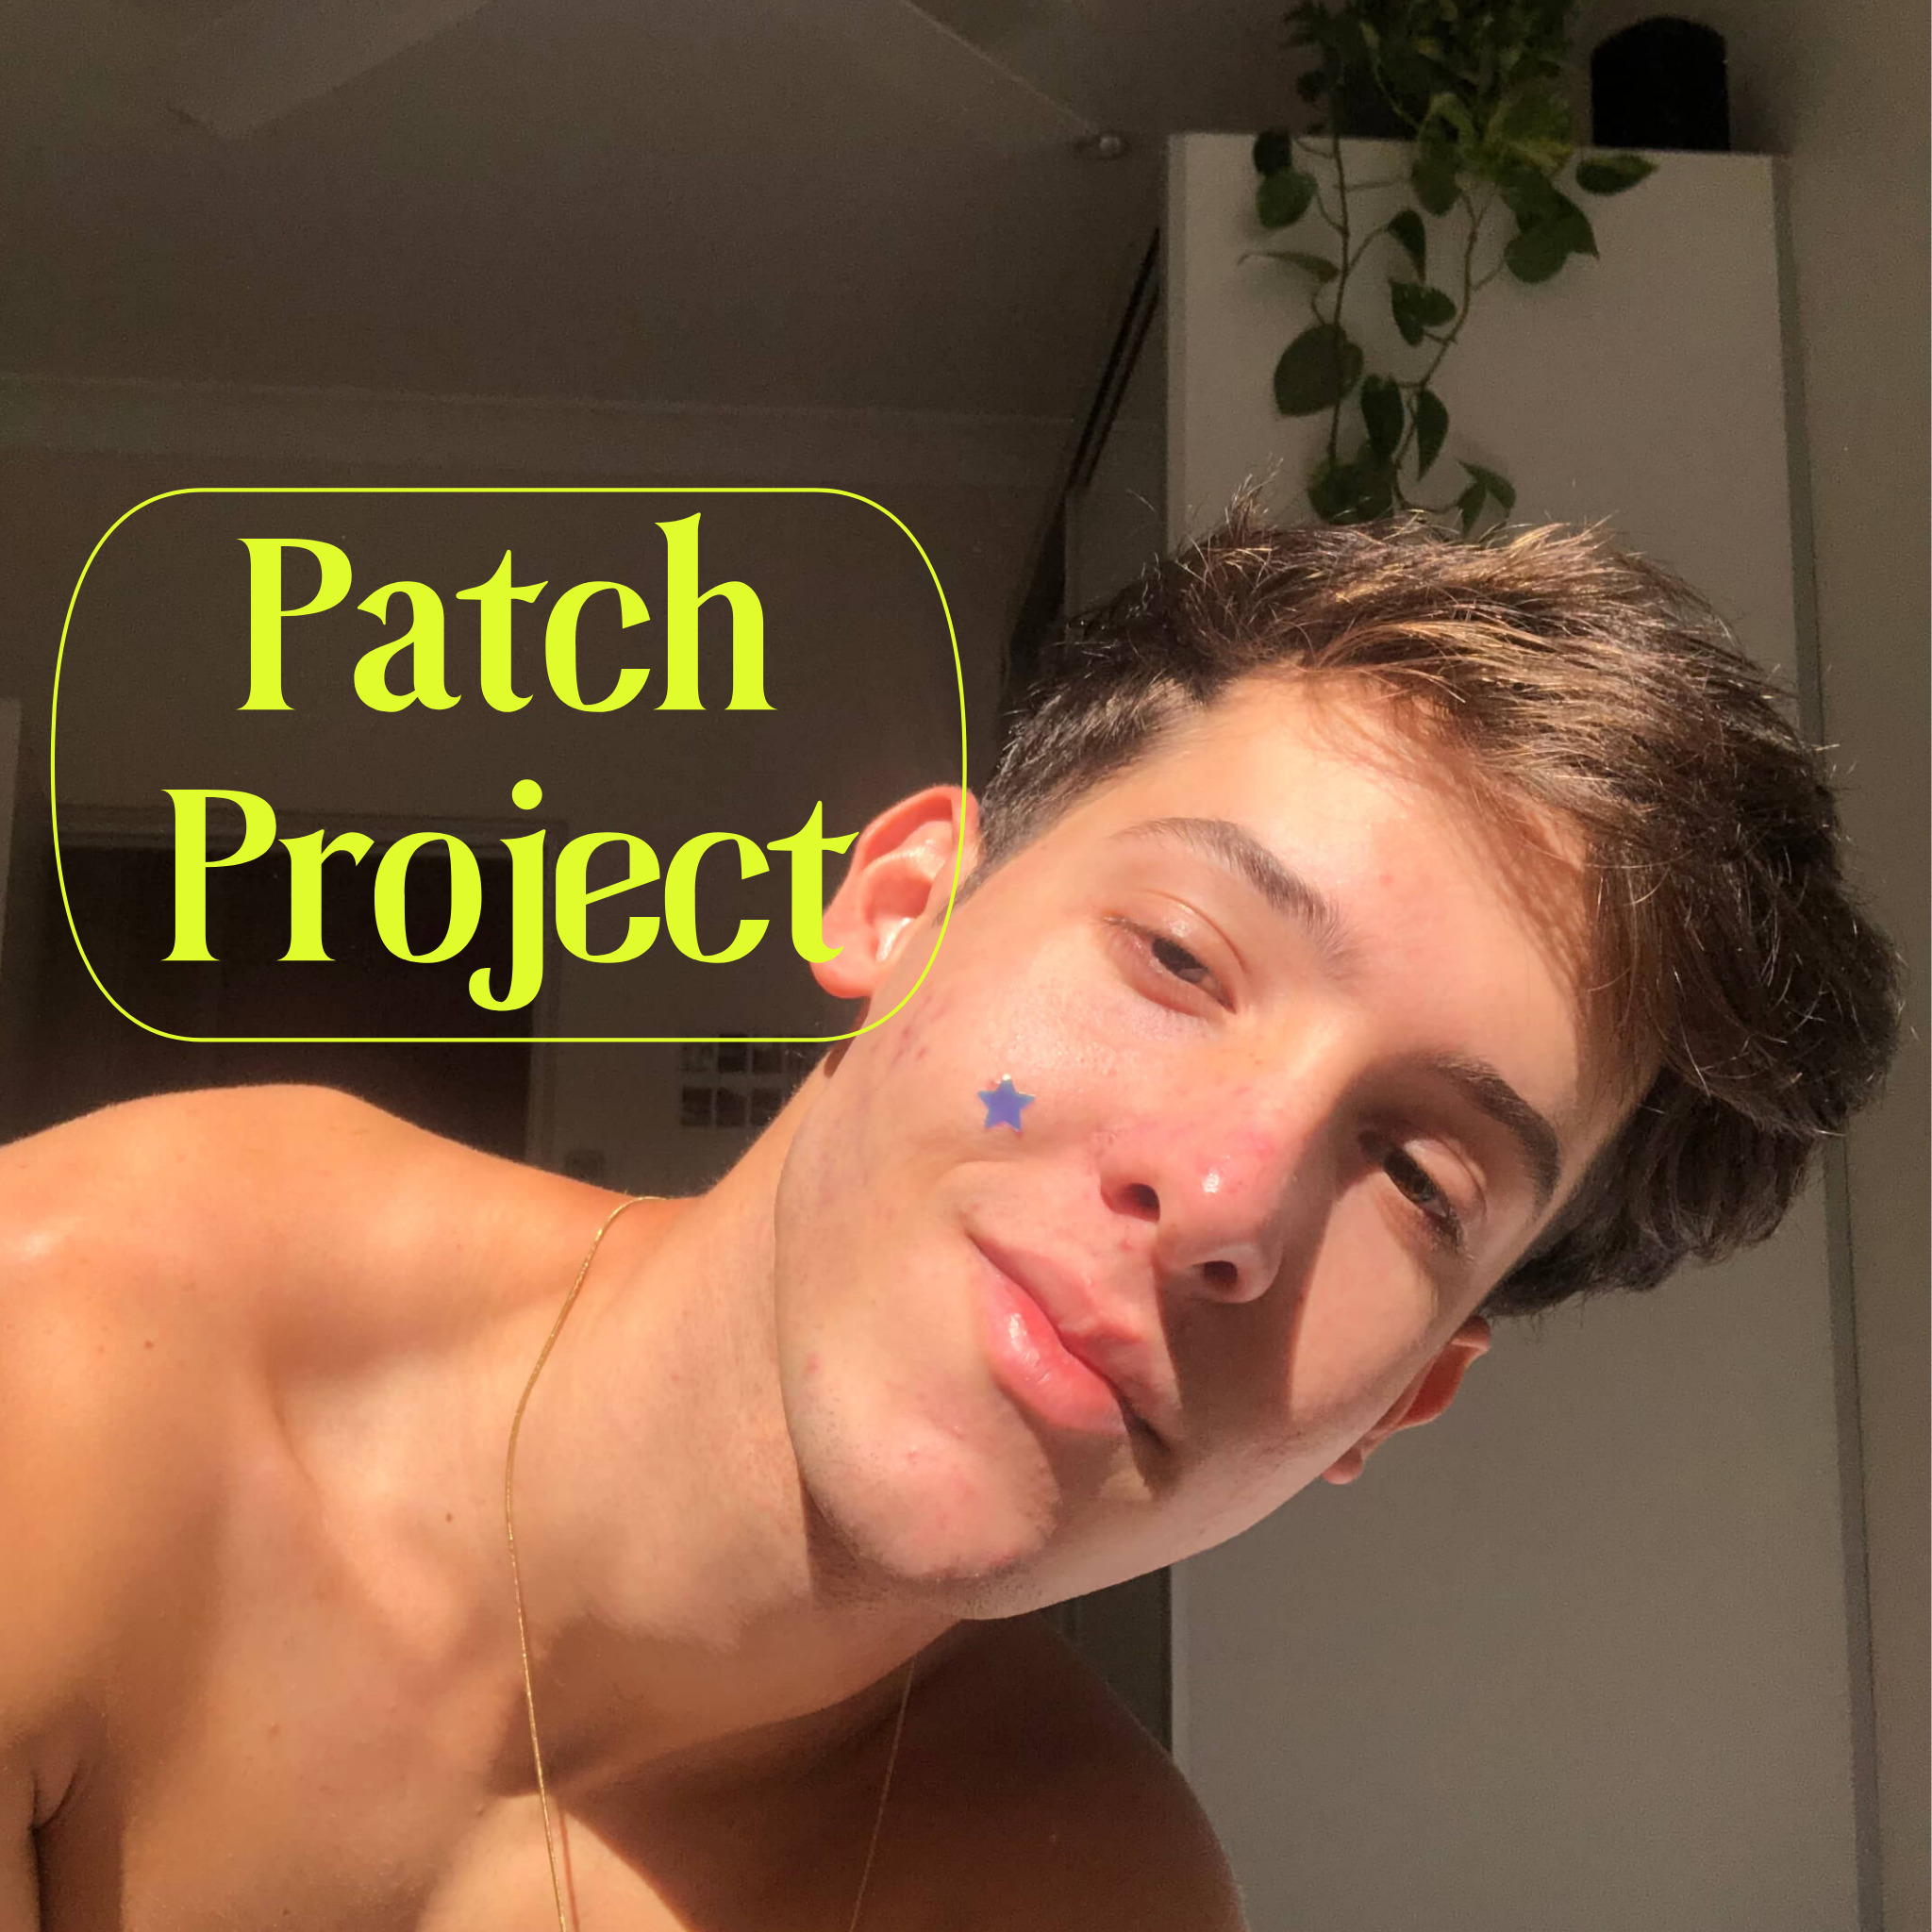 Best star pimple patch on a boy's face. Patch project